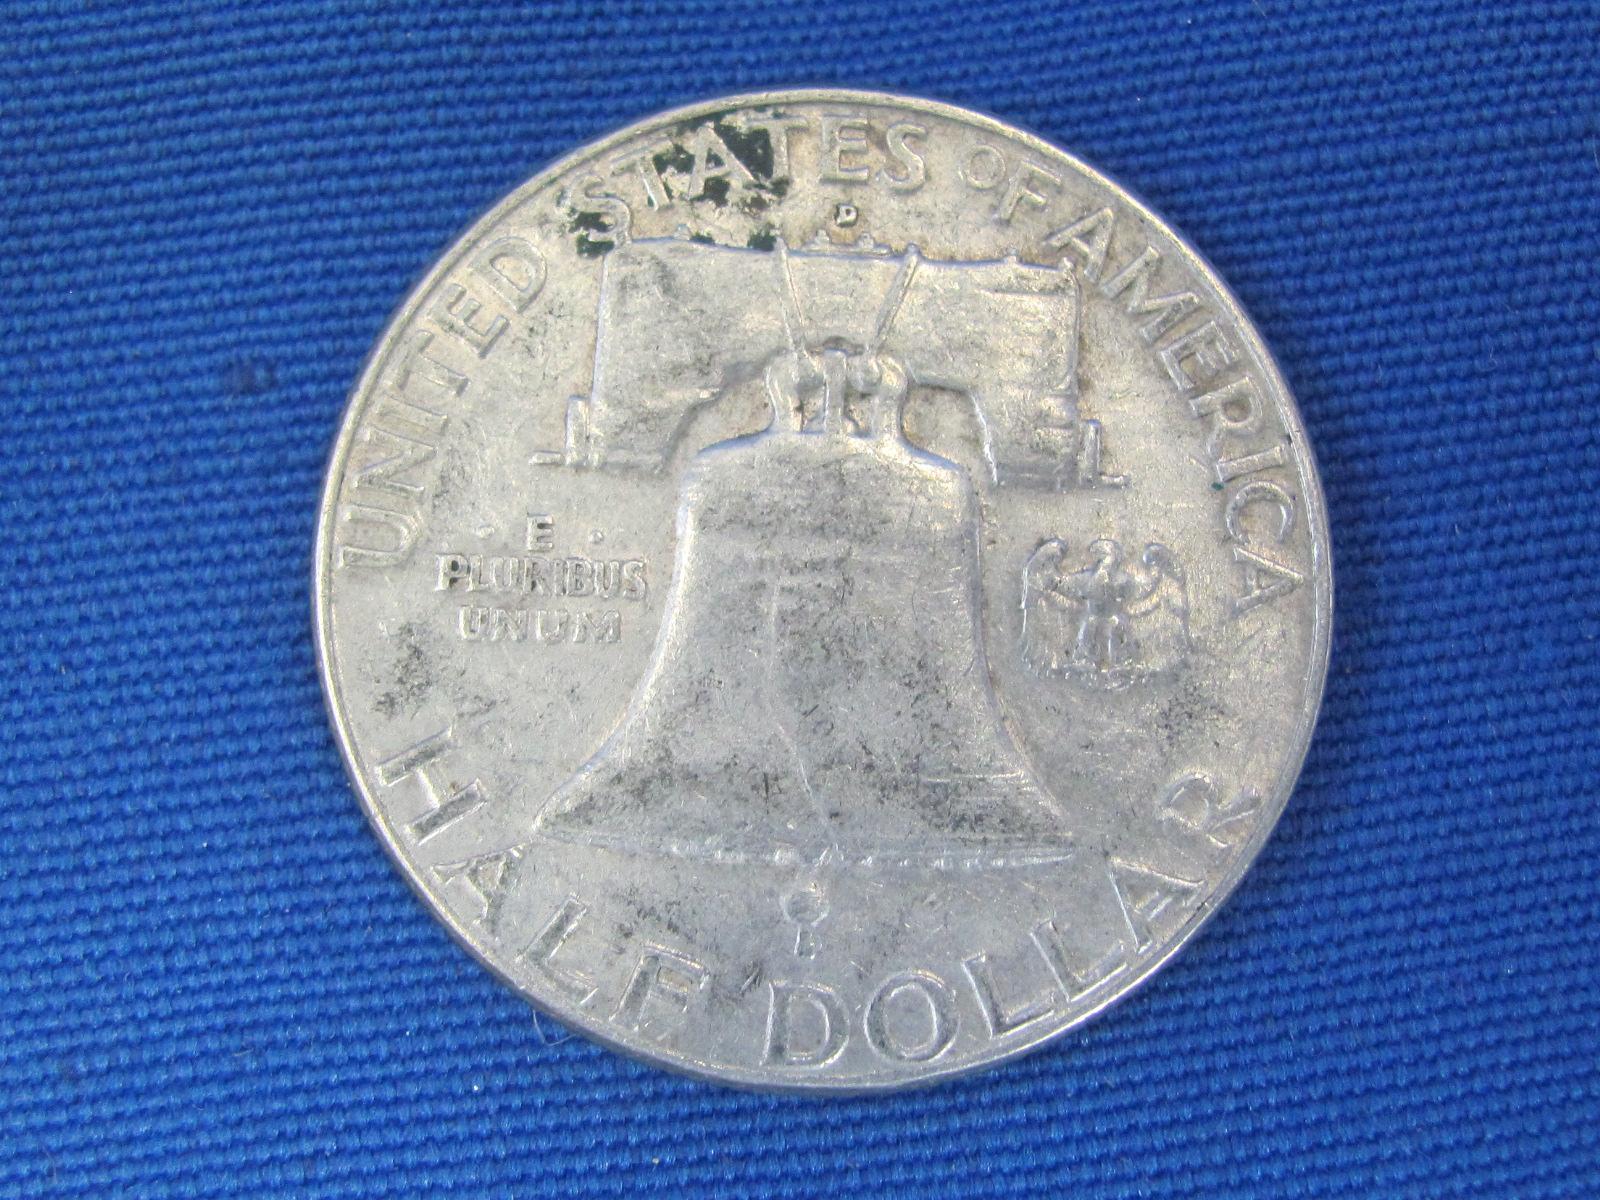 2 Franklin Half Dollars – 1961-D, 1962-D